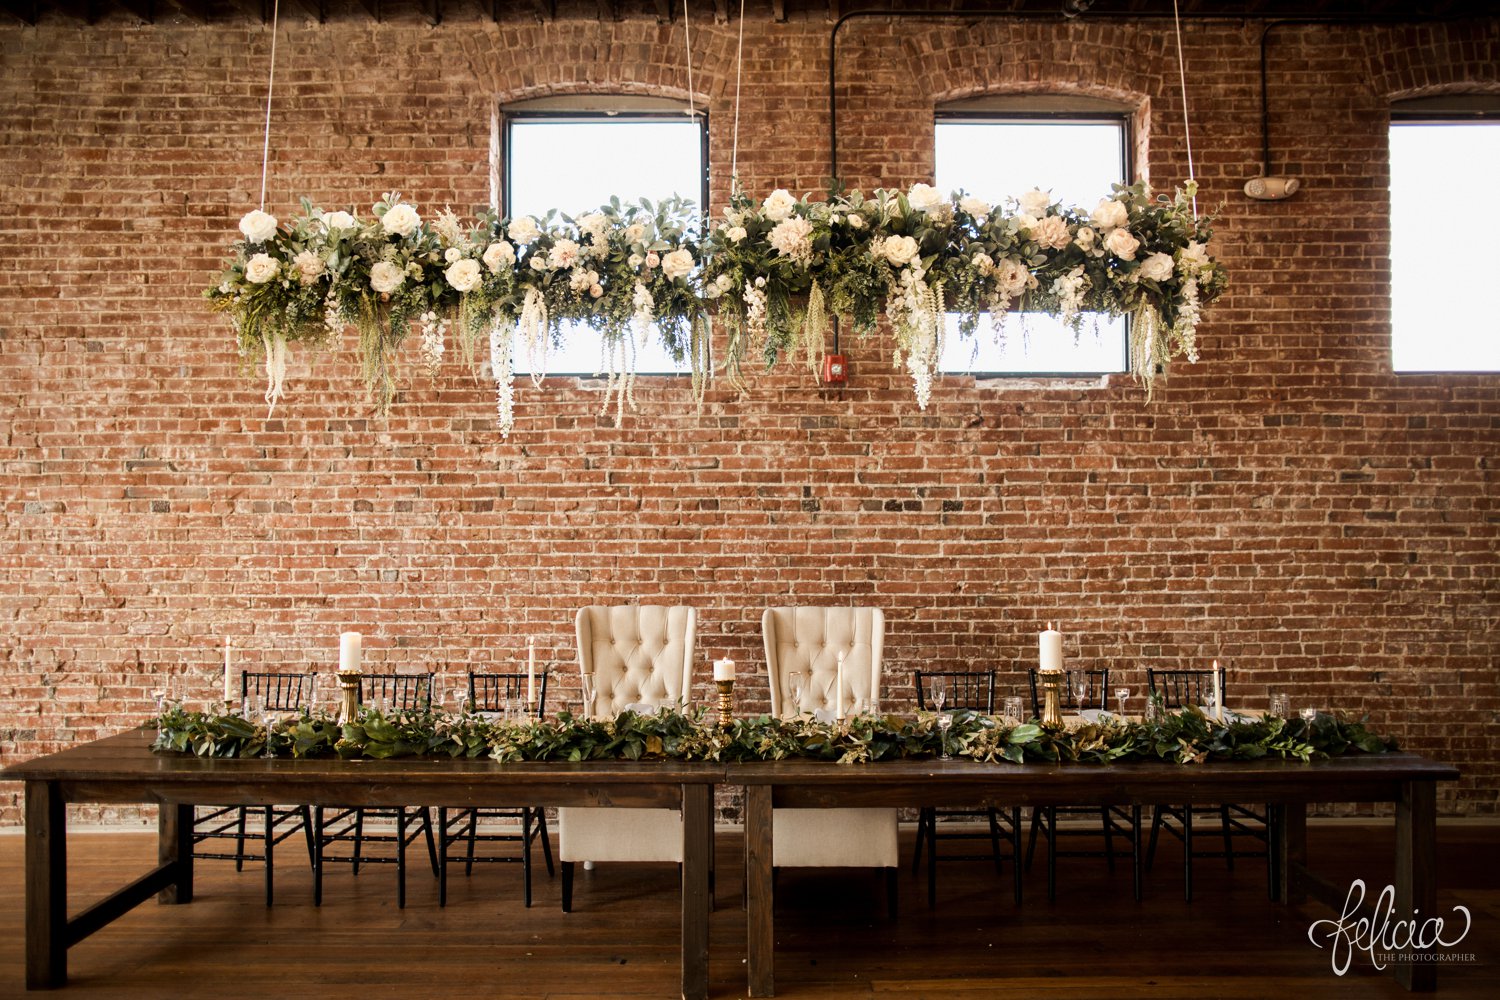 images by feliciathephotographer.com | magnolia venue | urban garden wedding | photographer | kansas city missouri | exposed brick | hanging bouquets | head table | candles | centerpieces | botanical floral design | 